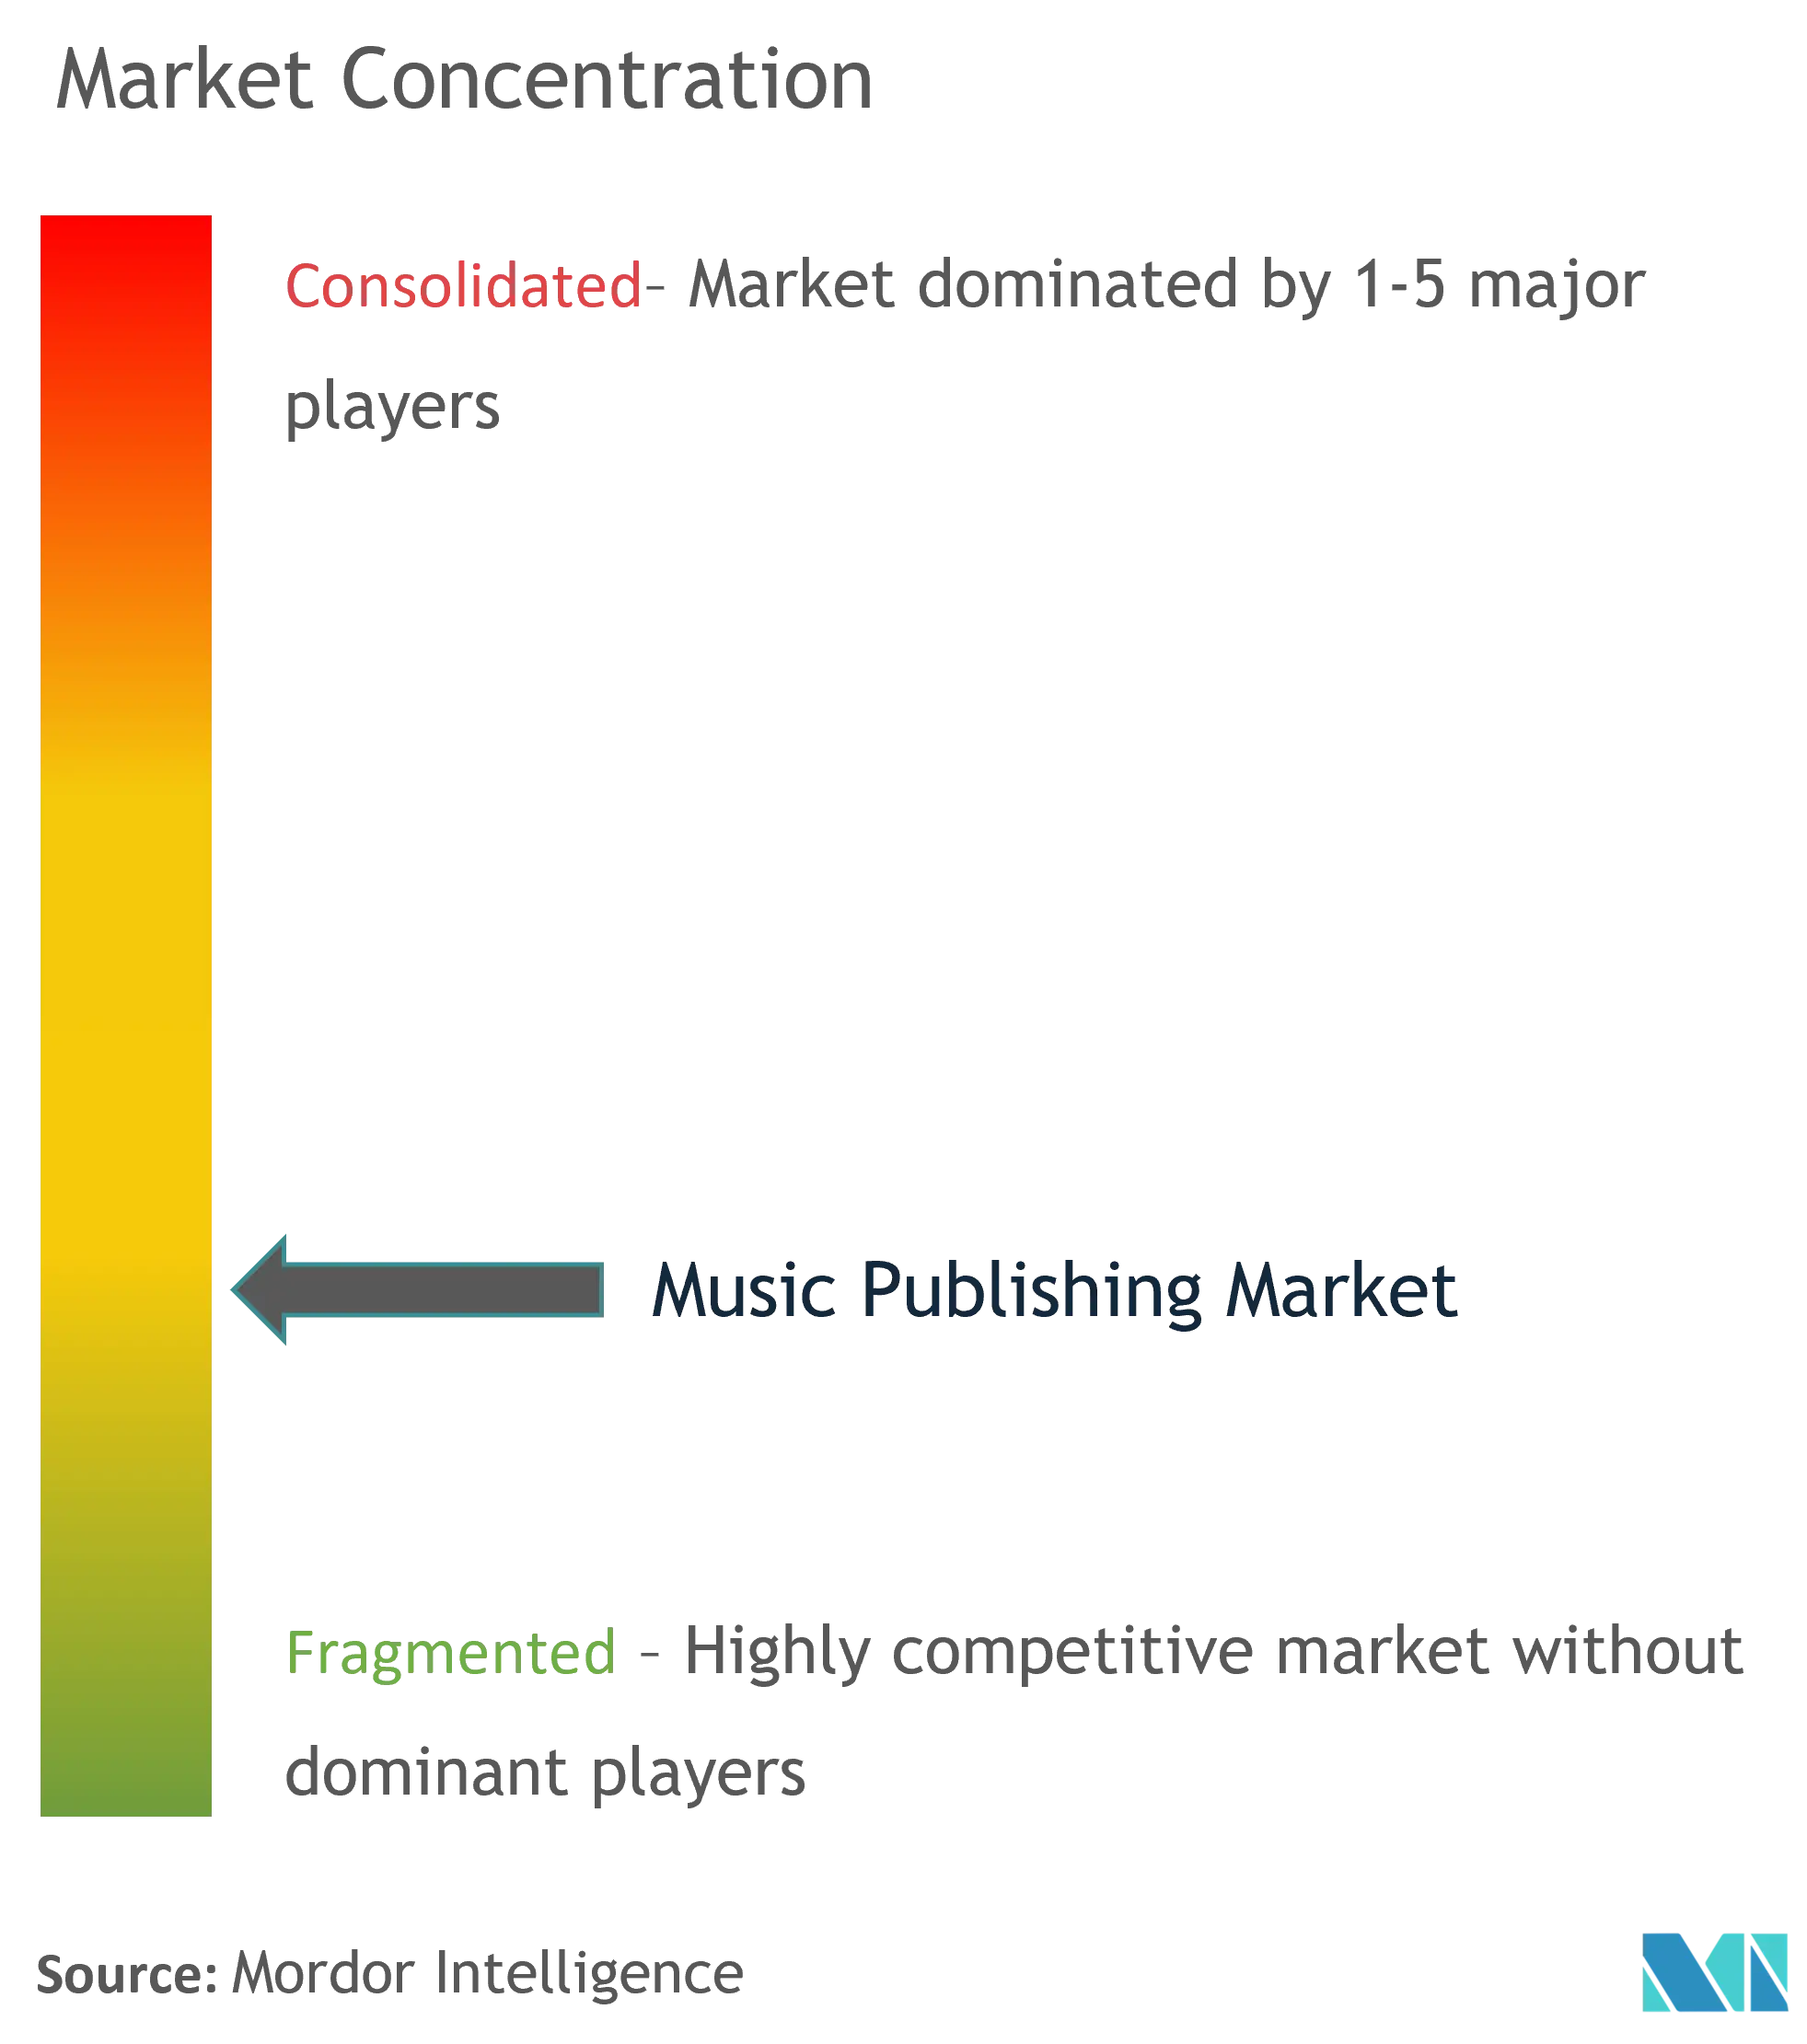 Music Publishing Market - Market Concentration.png